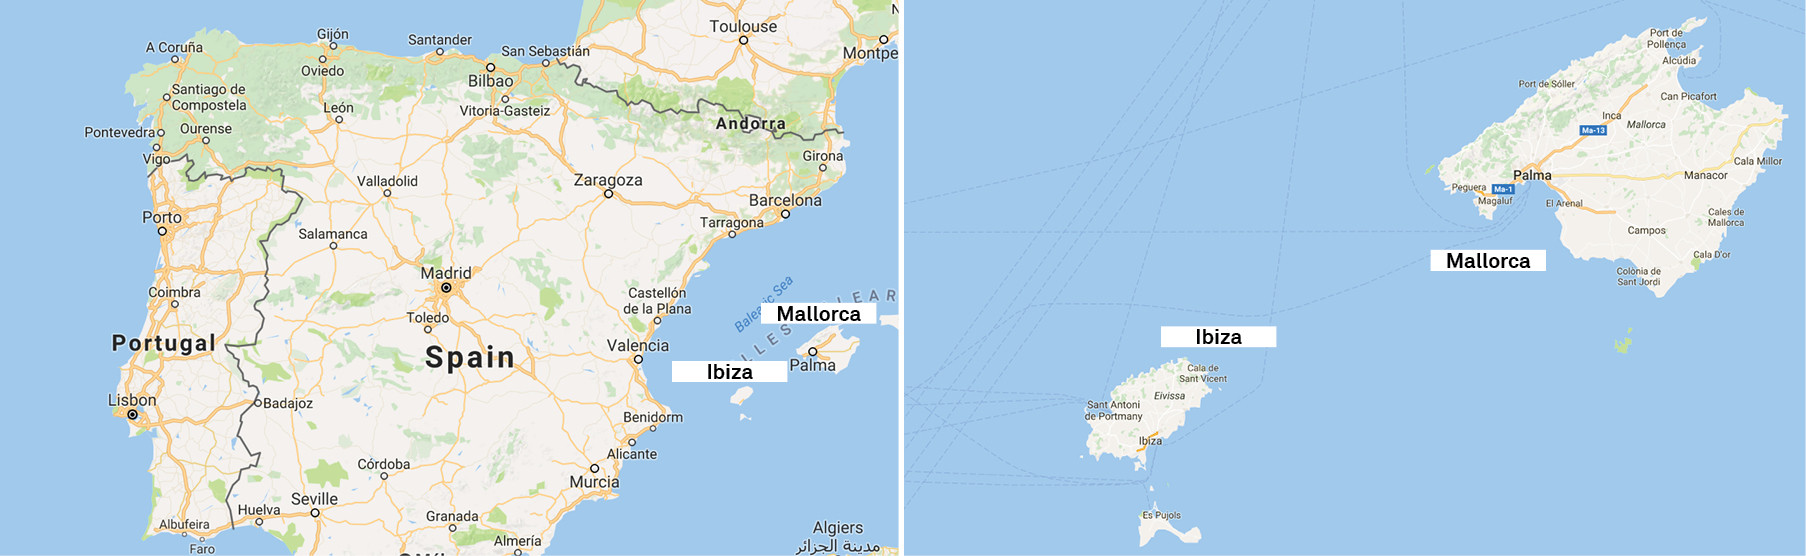 Map-Ibiza-Mallorca-Spain